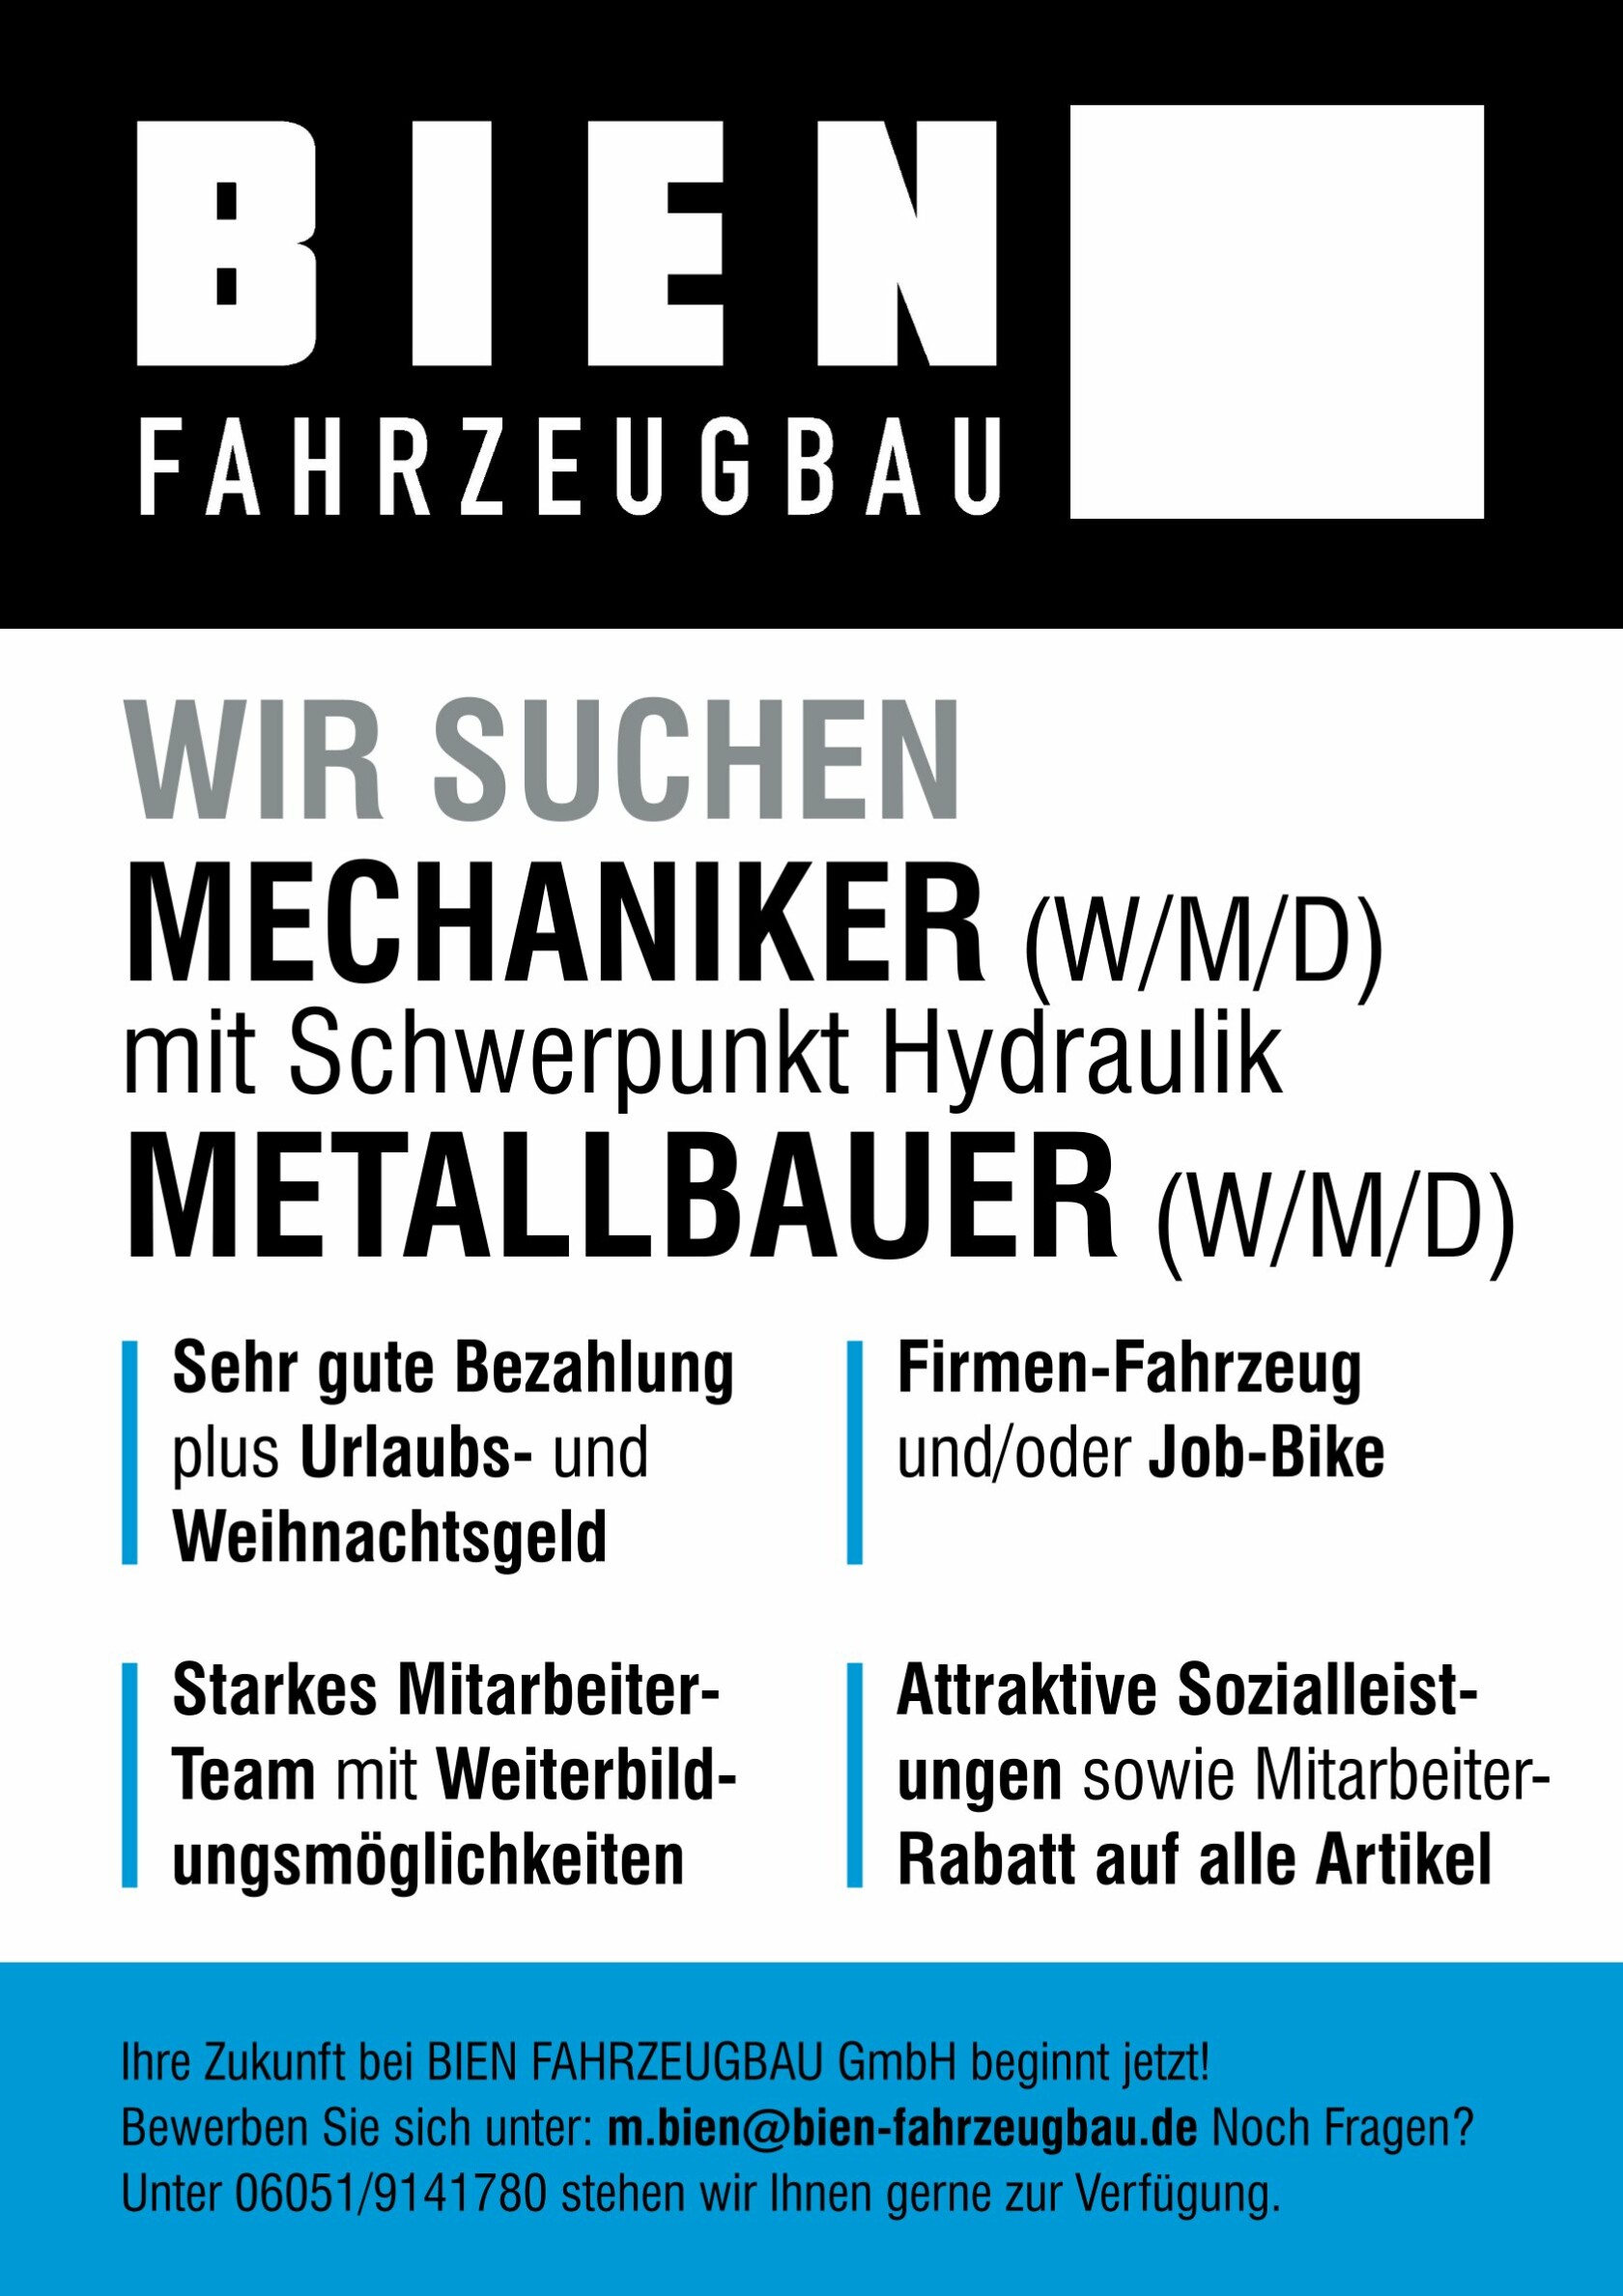 Bien Fahrzeugbau GmbH